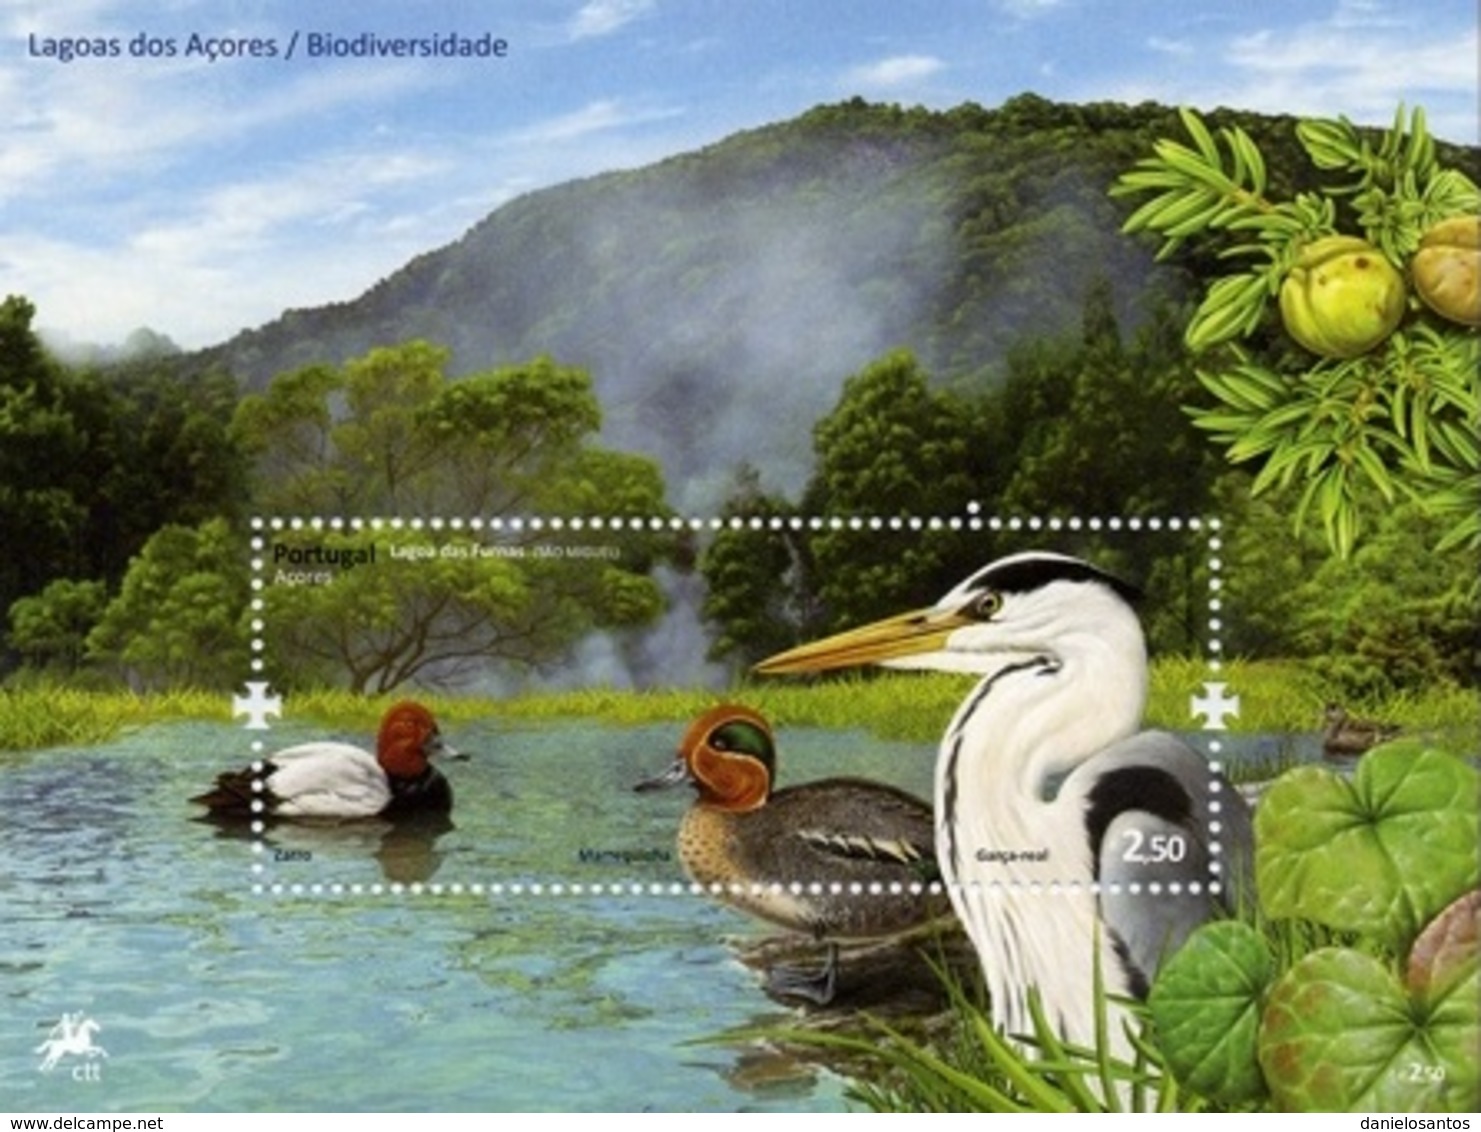 Portugal  Azores Açores 2009 Biodiversity Of Lakes And Lagoons Zarro, Marrequinha, Garça-real - Souvenir Sheet MNH - Patos